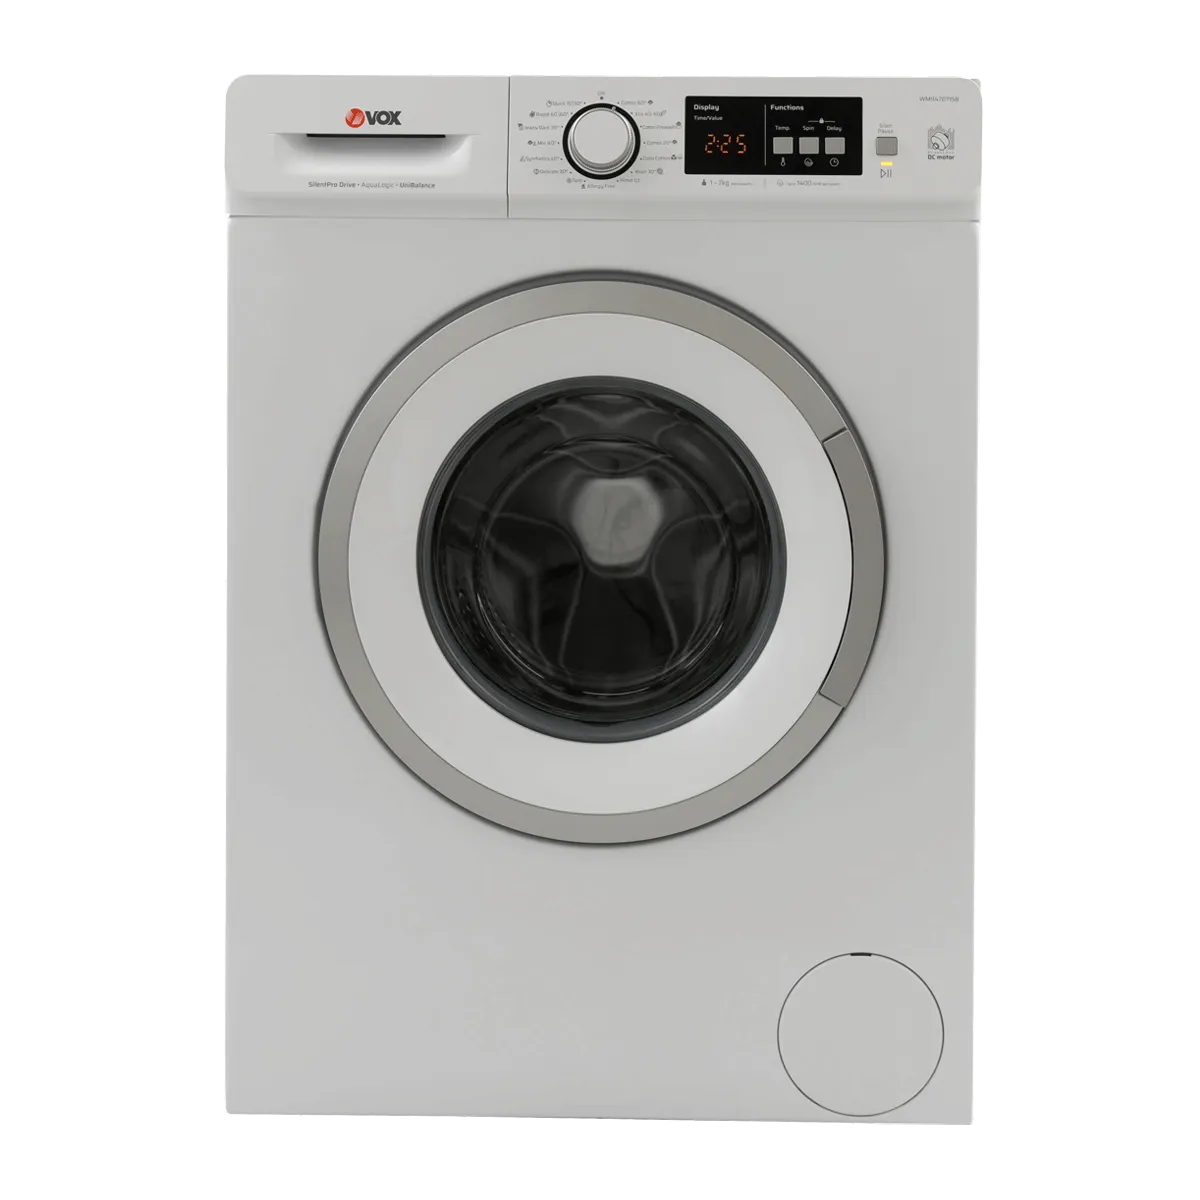 Washing machine WMI1470-T15B 